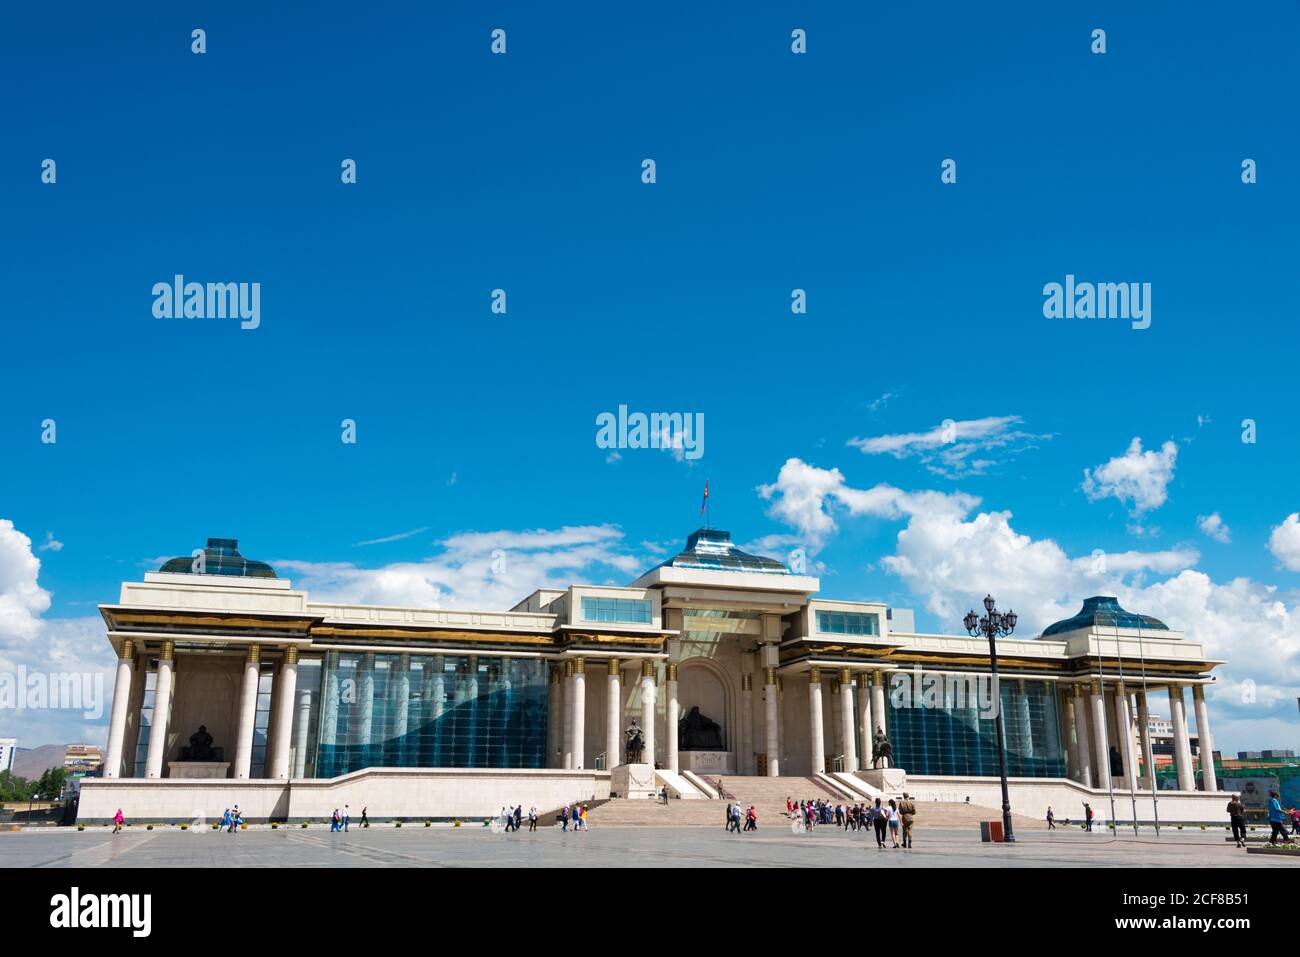 ULAANBAATAR, MONGOLIA - Sukhbaatar Square (Chinggis Square). a famous Tourist spot in Ulaanbaatar, Mongolia. Stock Photo